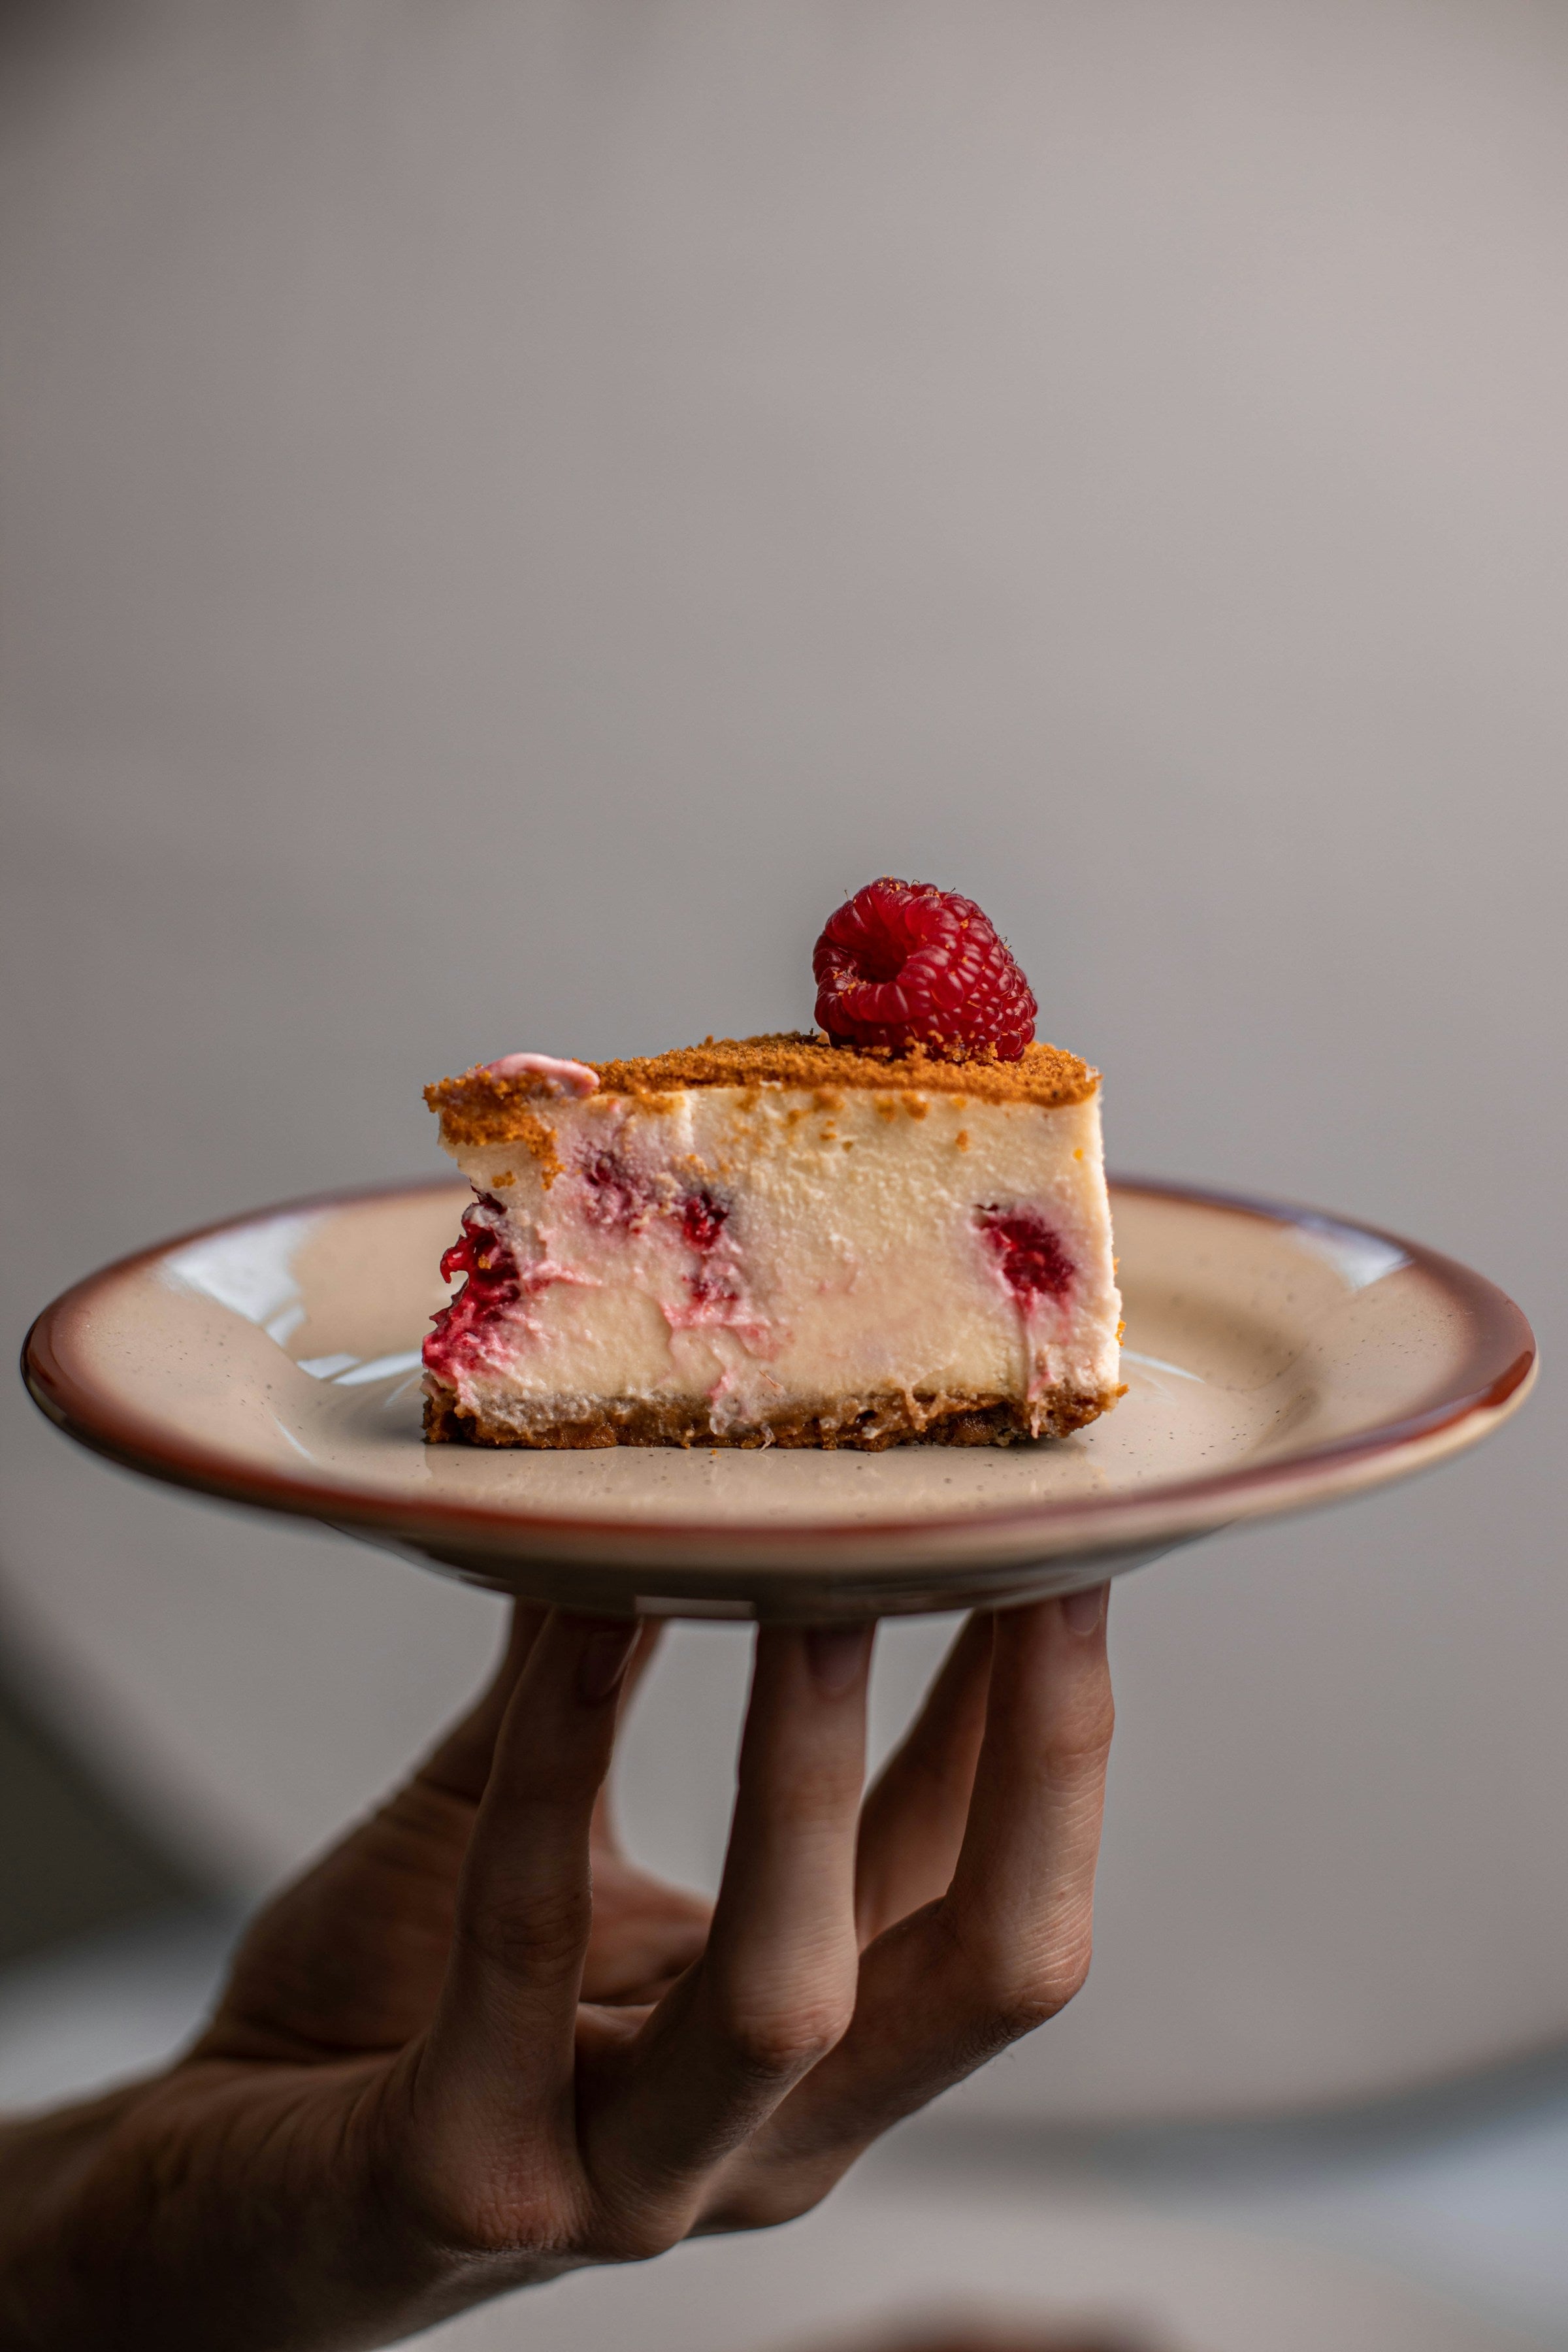 Decoding The Shelf Life: How Long Does Cheesecake Last In The Fridge? | Fridge.com